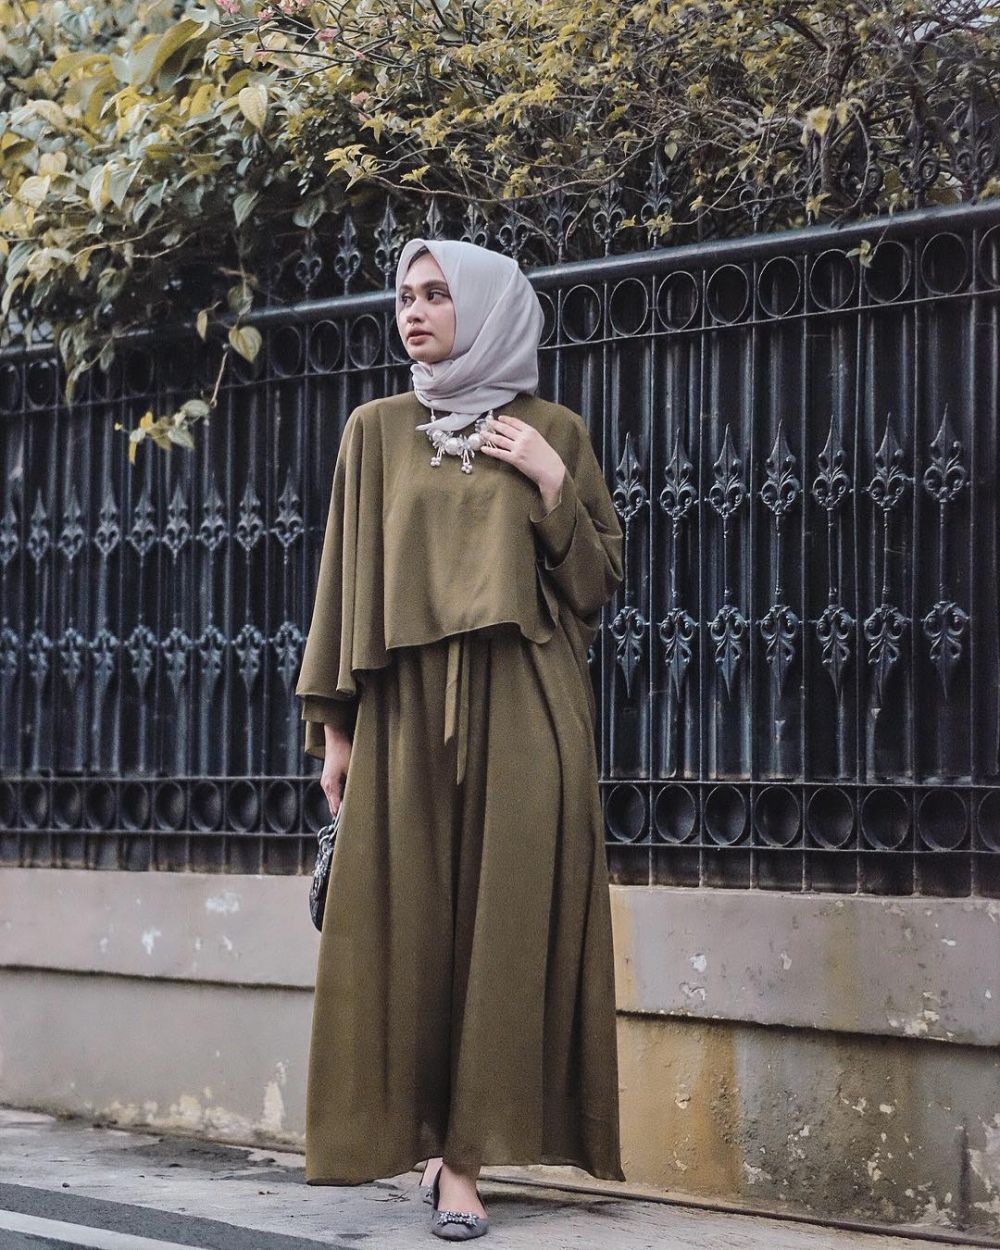 Ootd Hijab Baju Hijau Army Cocok Dengan Jilbab Warna Apa | Jilbab Gallery